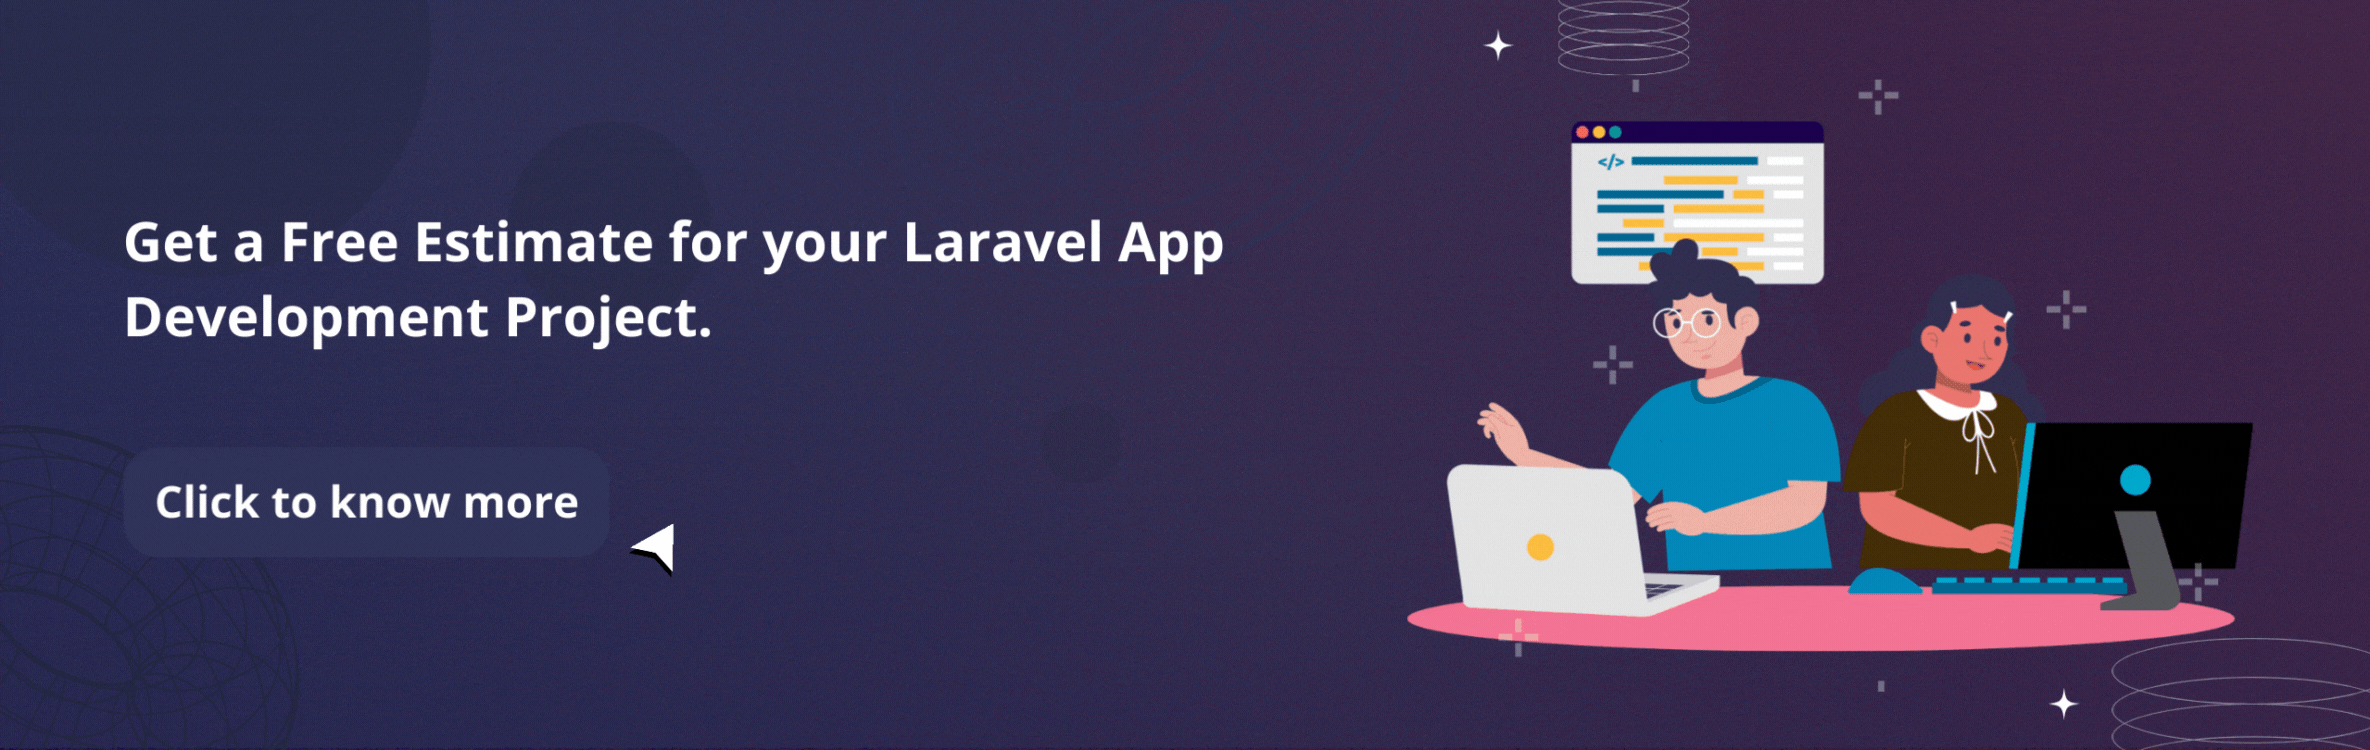 Get a free estimate for your Laravel app development project.